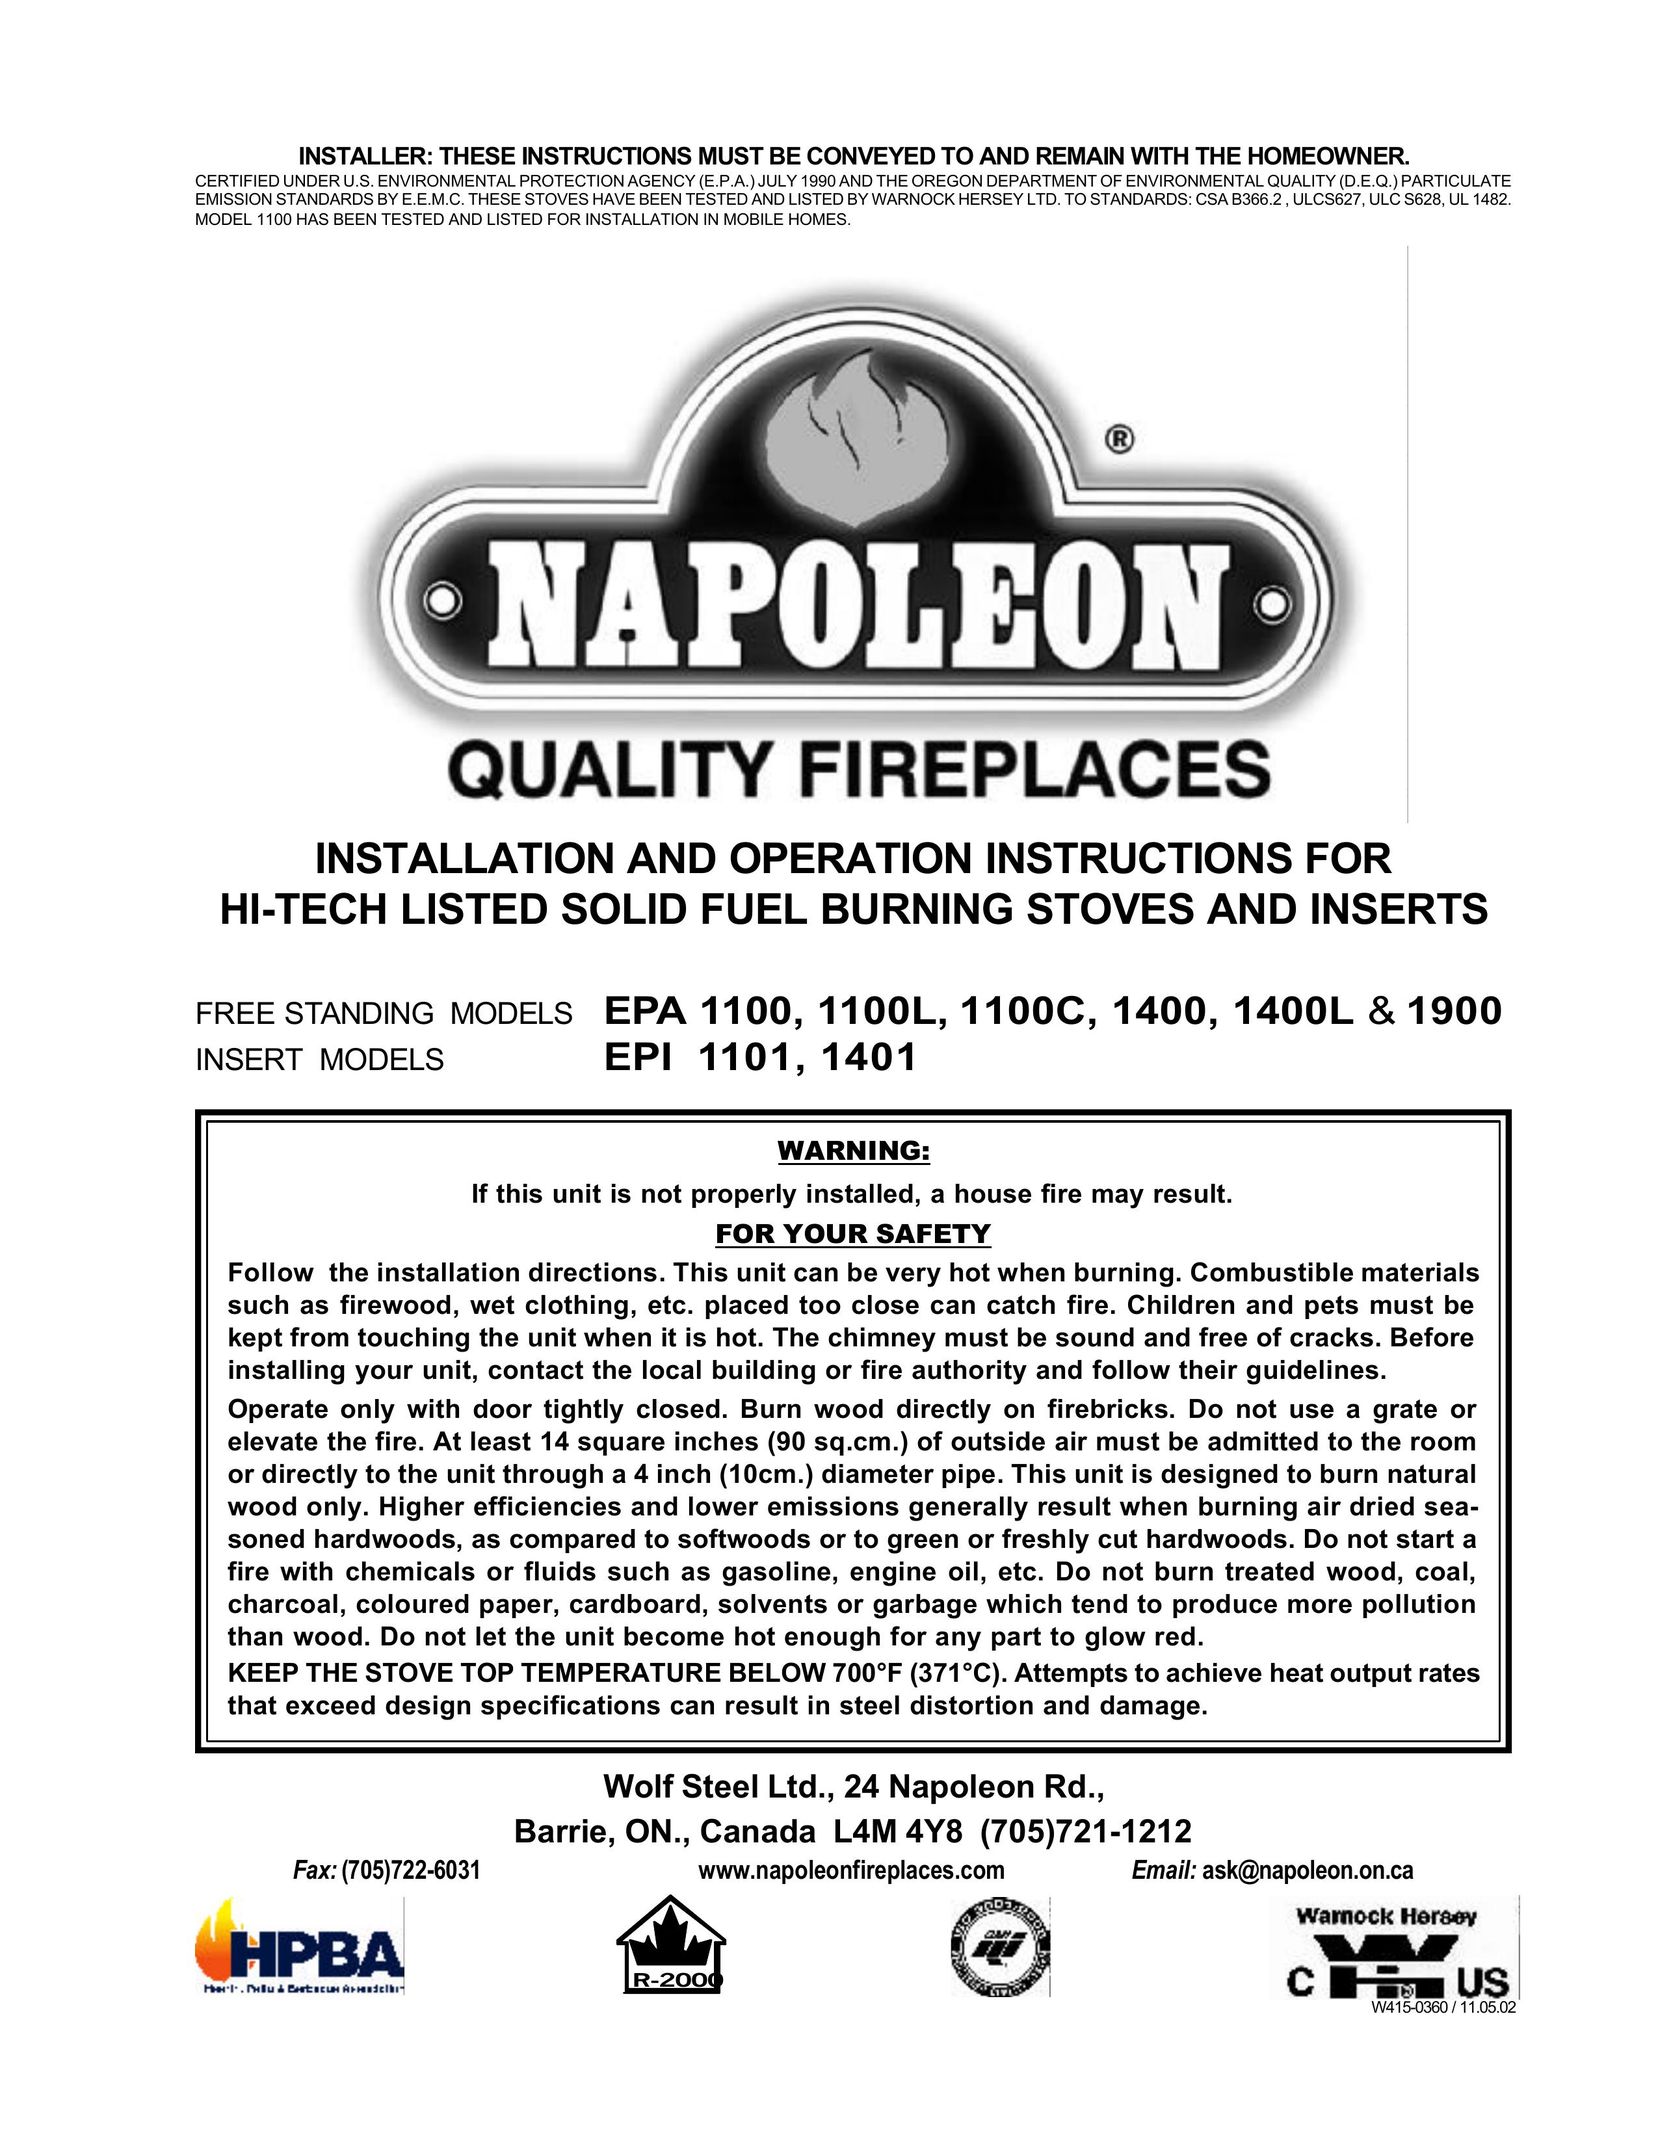 Napoleon Fireplaces EPA 1100 Stove User Manual